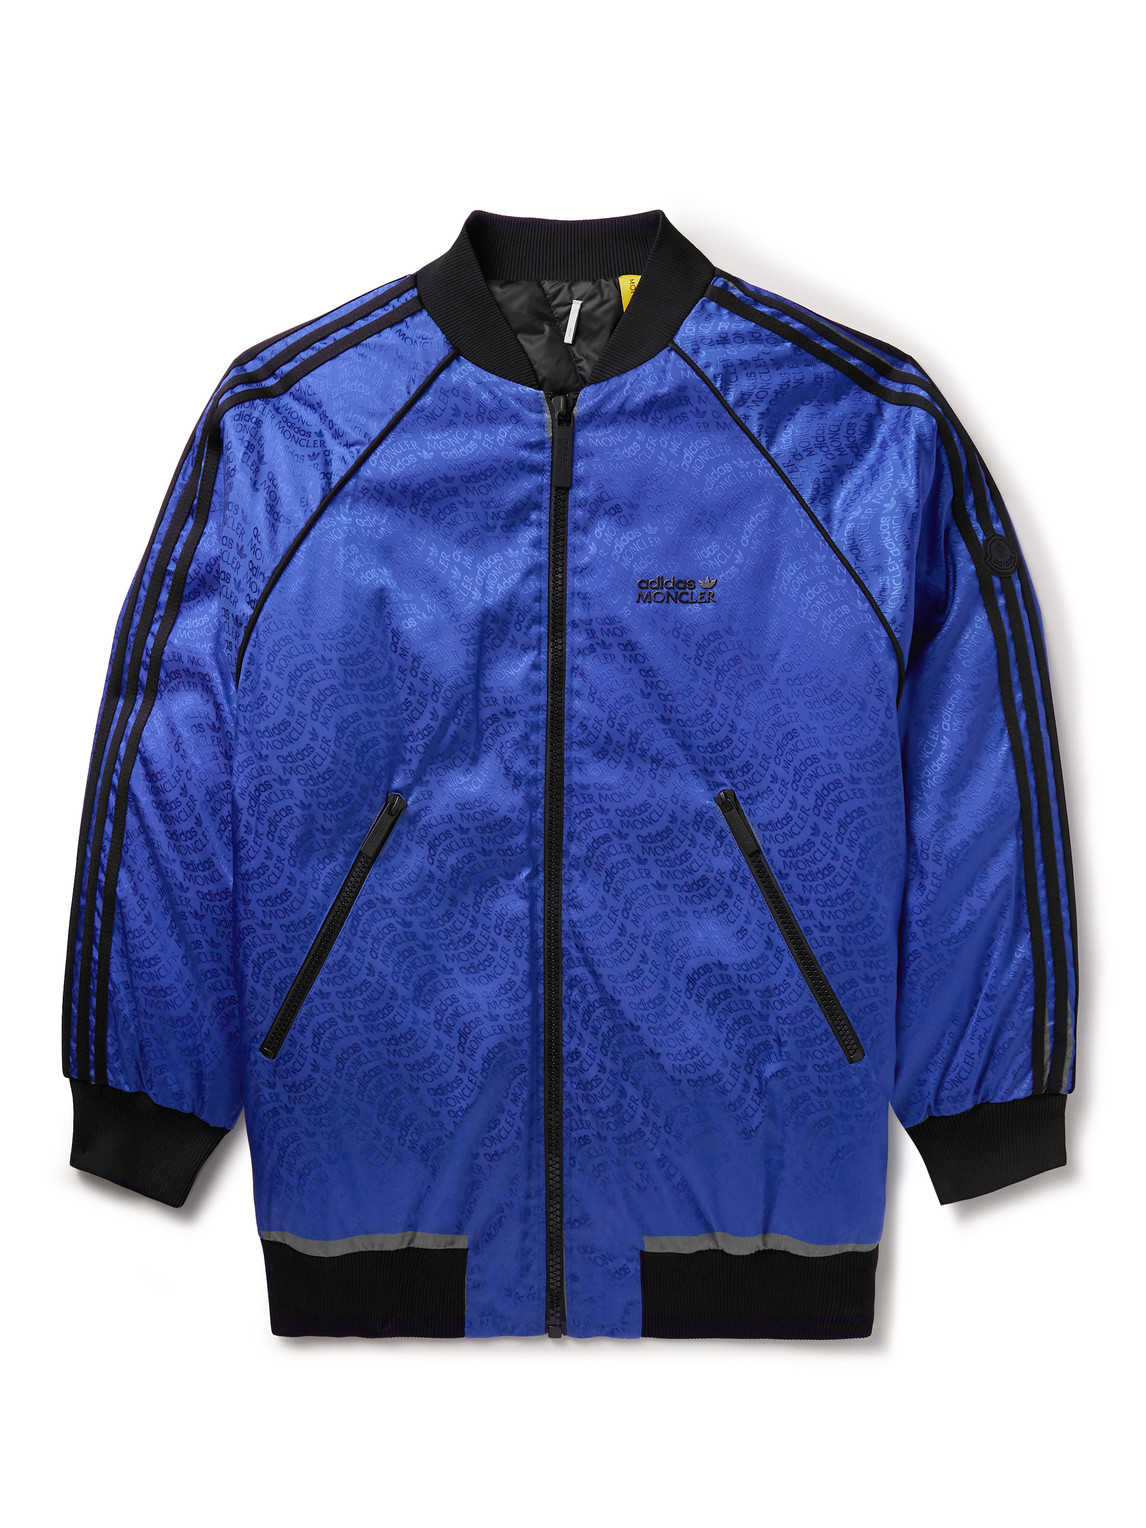 Moncler Genius Moncler X Adidas Originals Blue Seelos Down Bomber Jacket